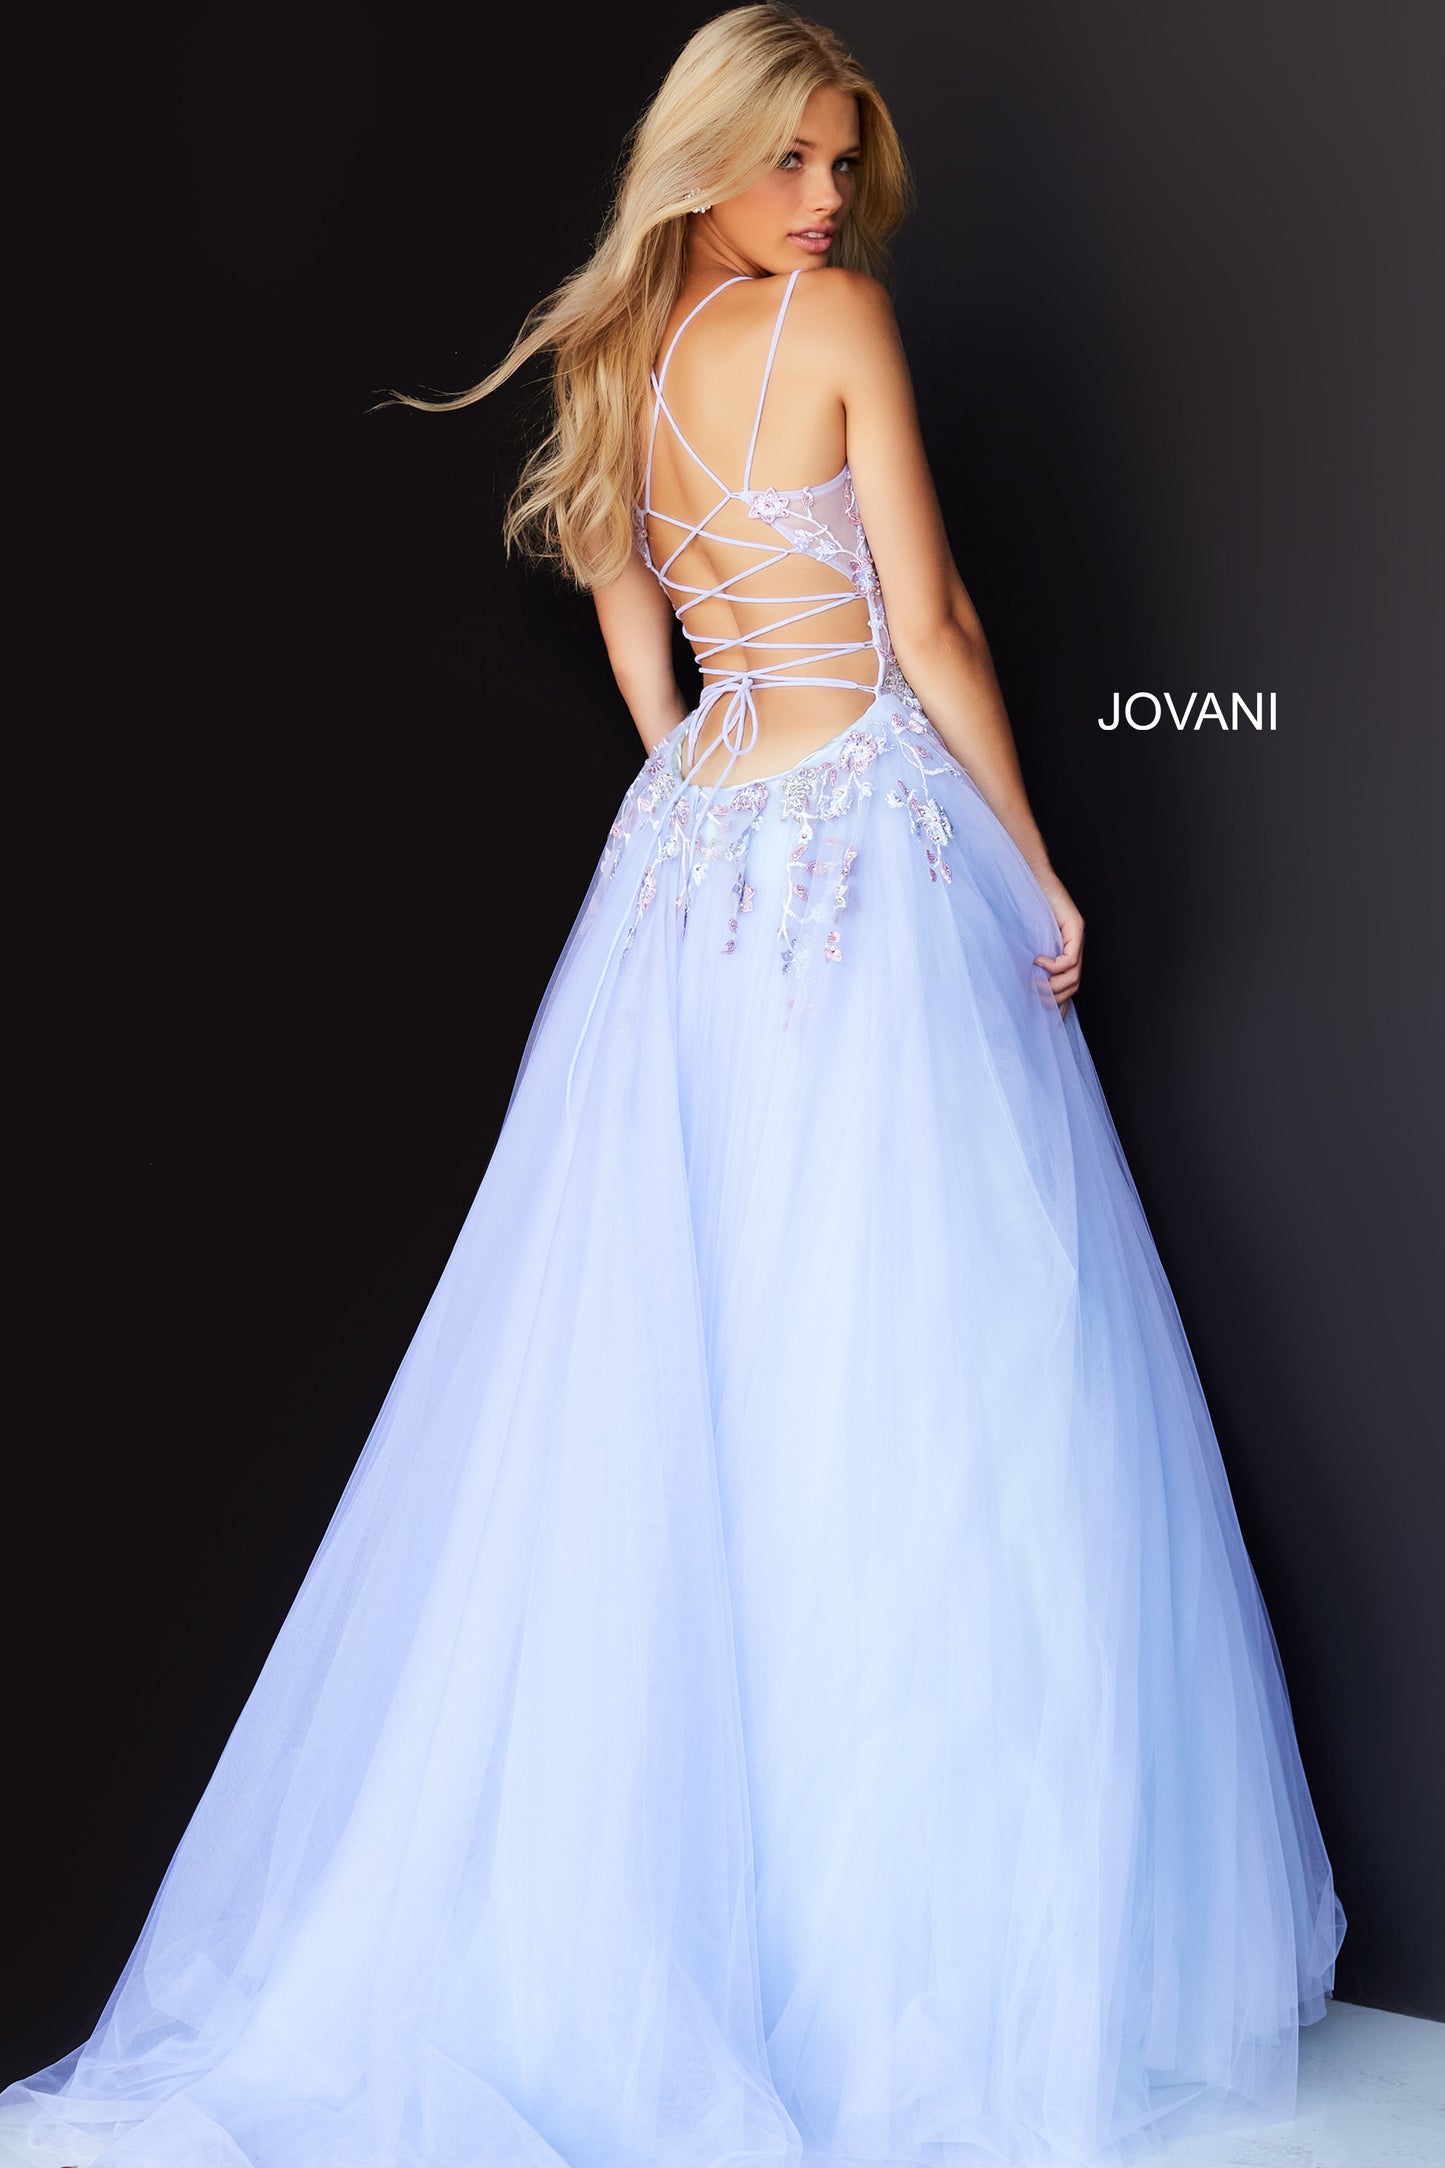 Jovani 06207 Lilac Prom Dress by Jovani.  V neckline sheer floral embellished corset bodice with a v neckline and crisscross tie open low back.  Tulle skirt. 